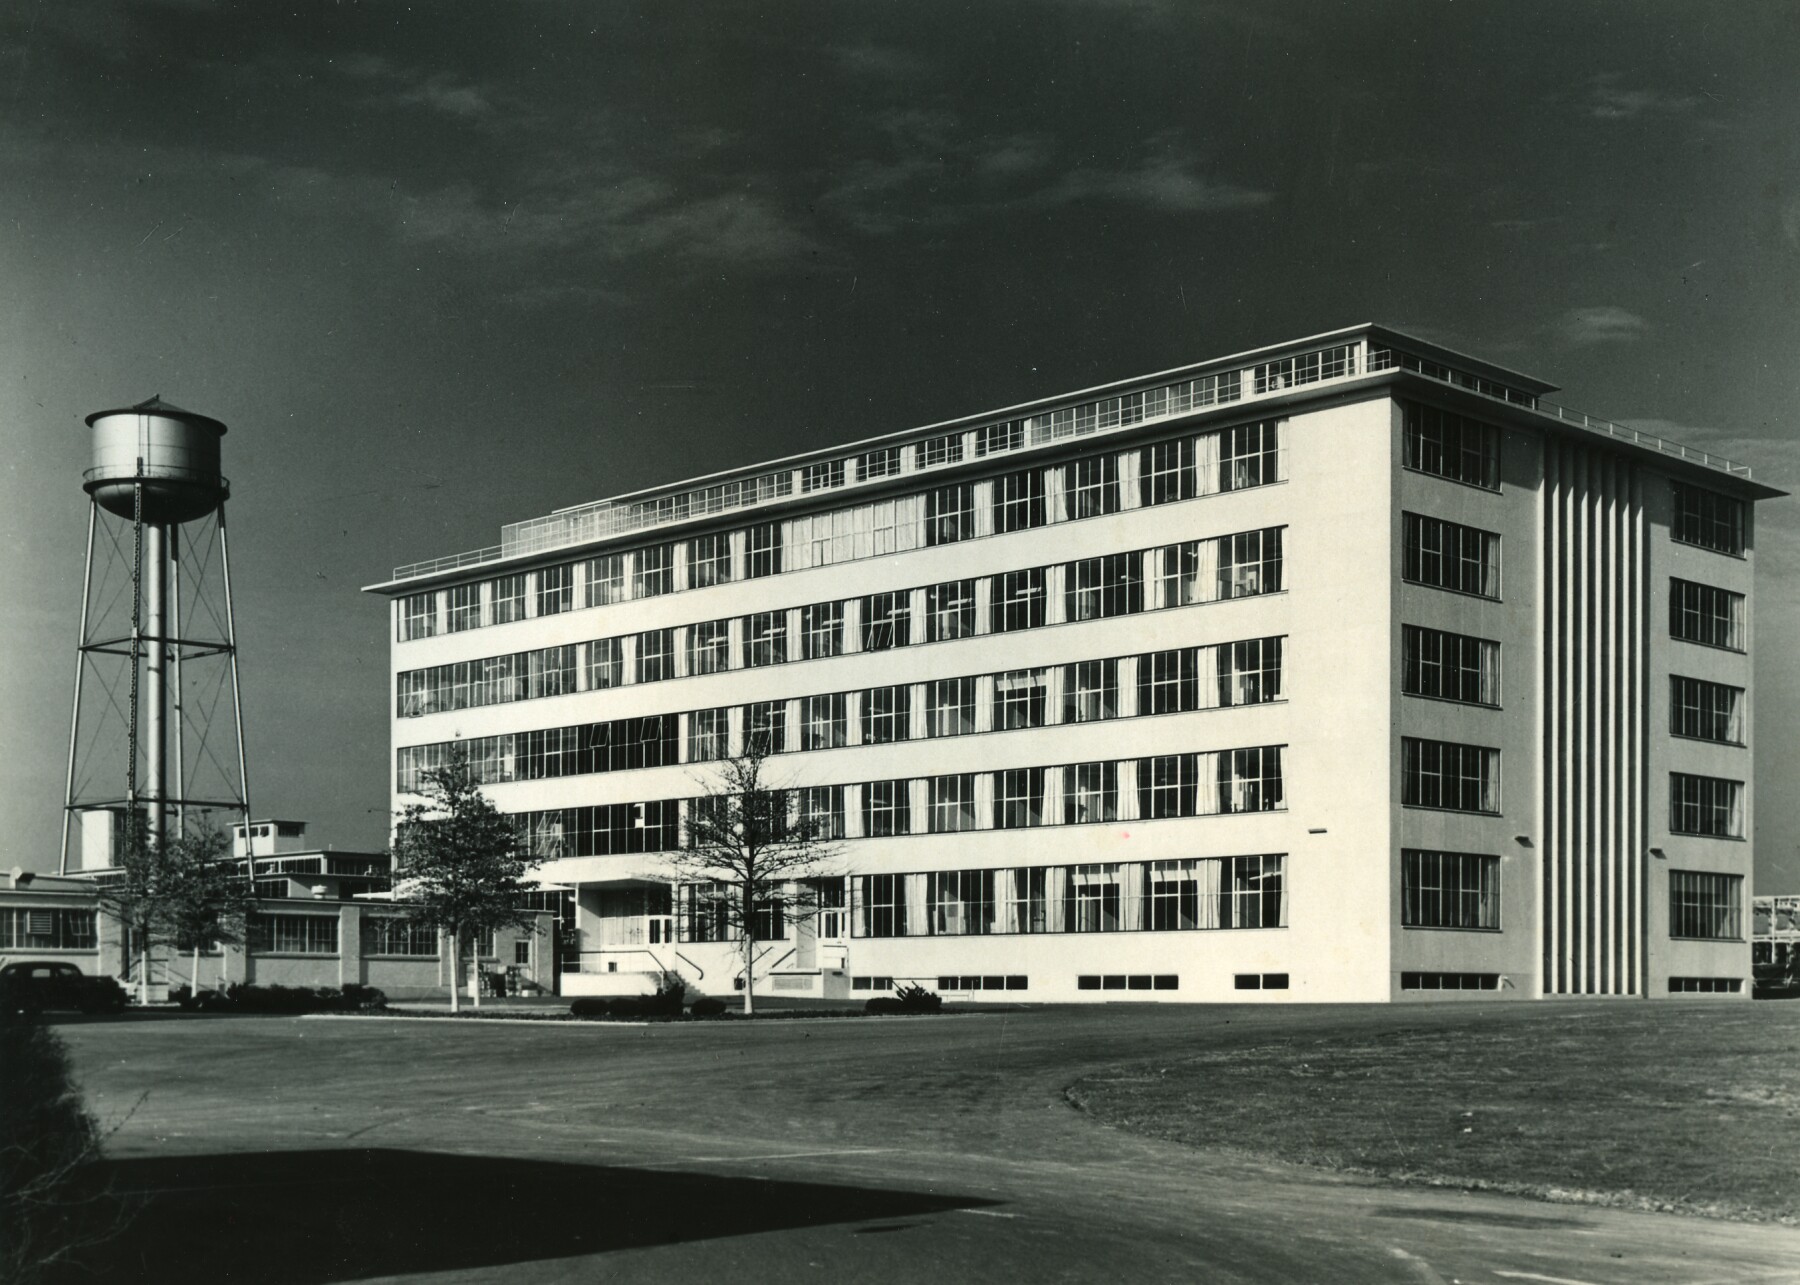 Roche-Nutley-Forschungsgebäude (1943), Roland Rohn (Foto: Archiv Roche, Basel)